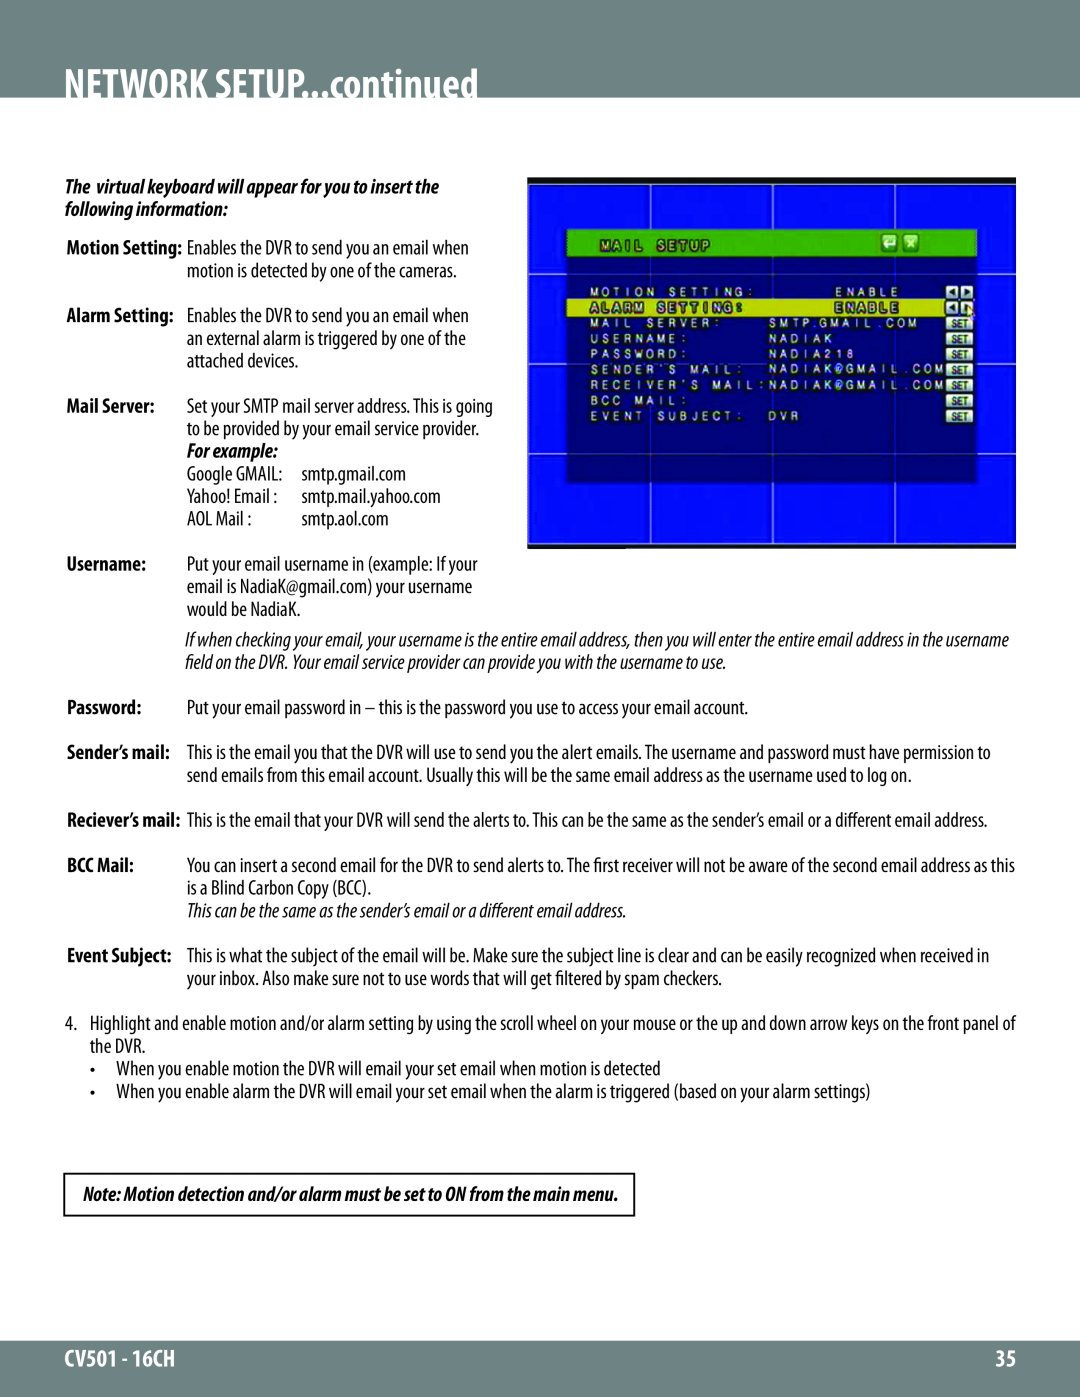 SVAT Electronics CV501 - 16CH instruction manual NETWORK SETUP...continued, Mail Server, Username, Password 